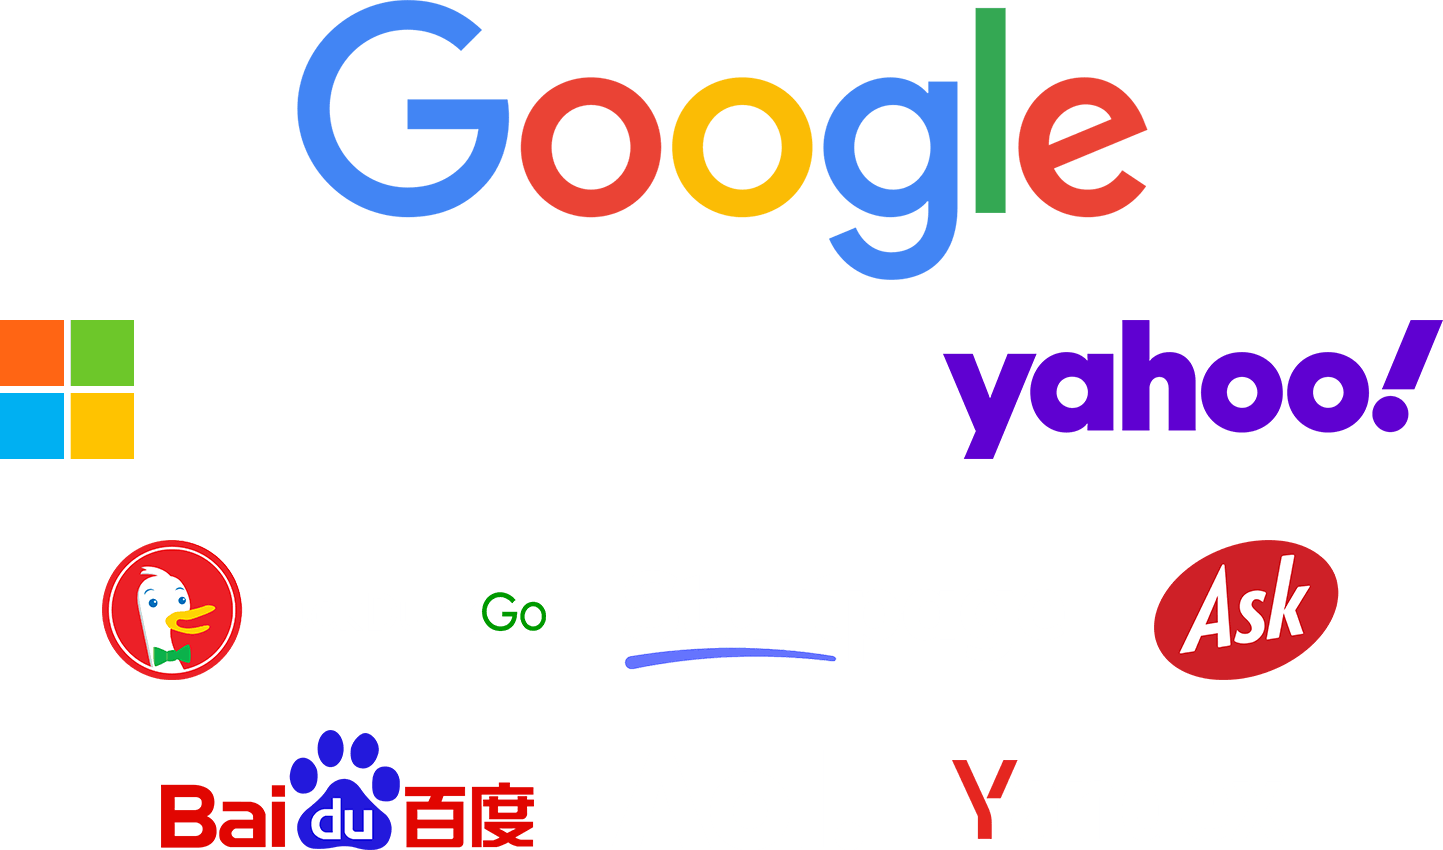 Major Search Engines: Google, Bing, YaHoo! DuckDuckGo and Ask